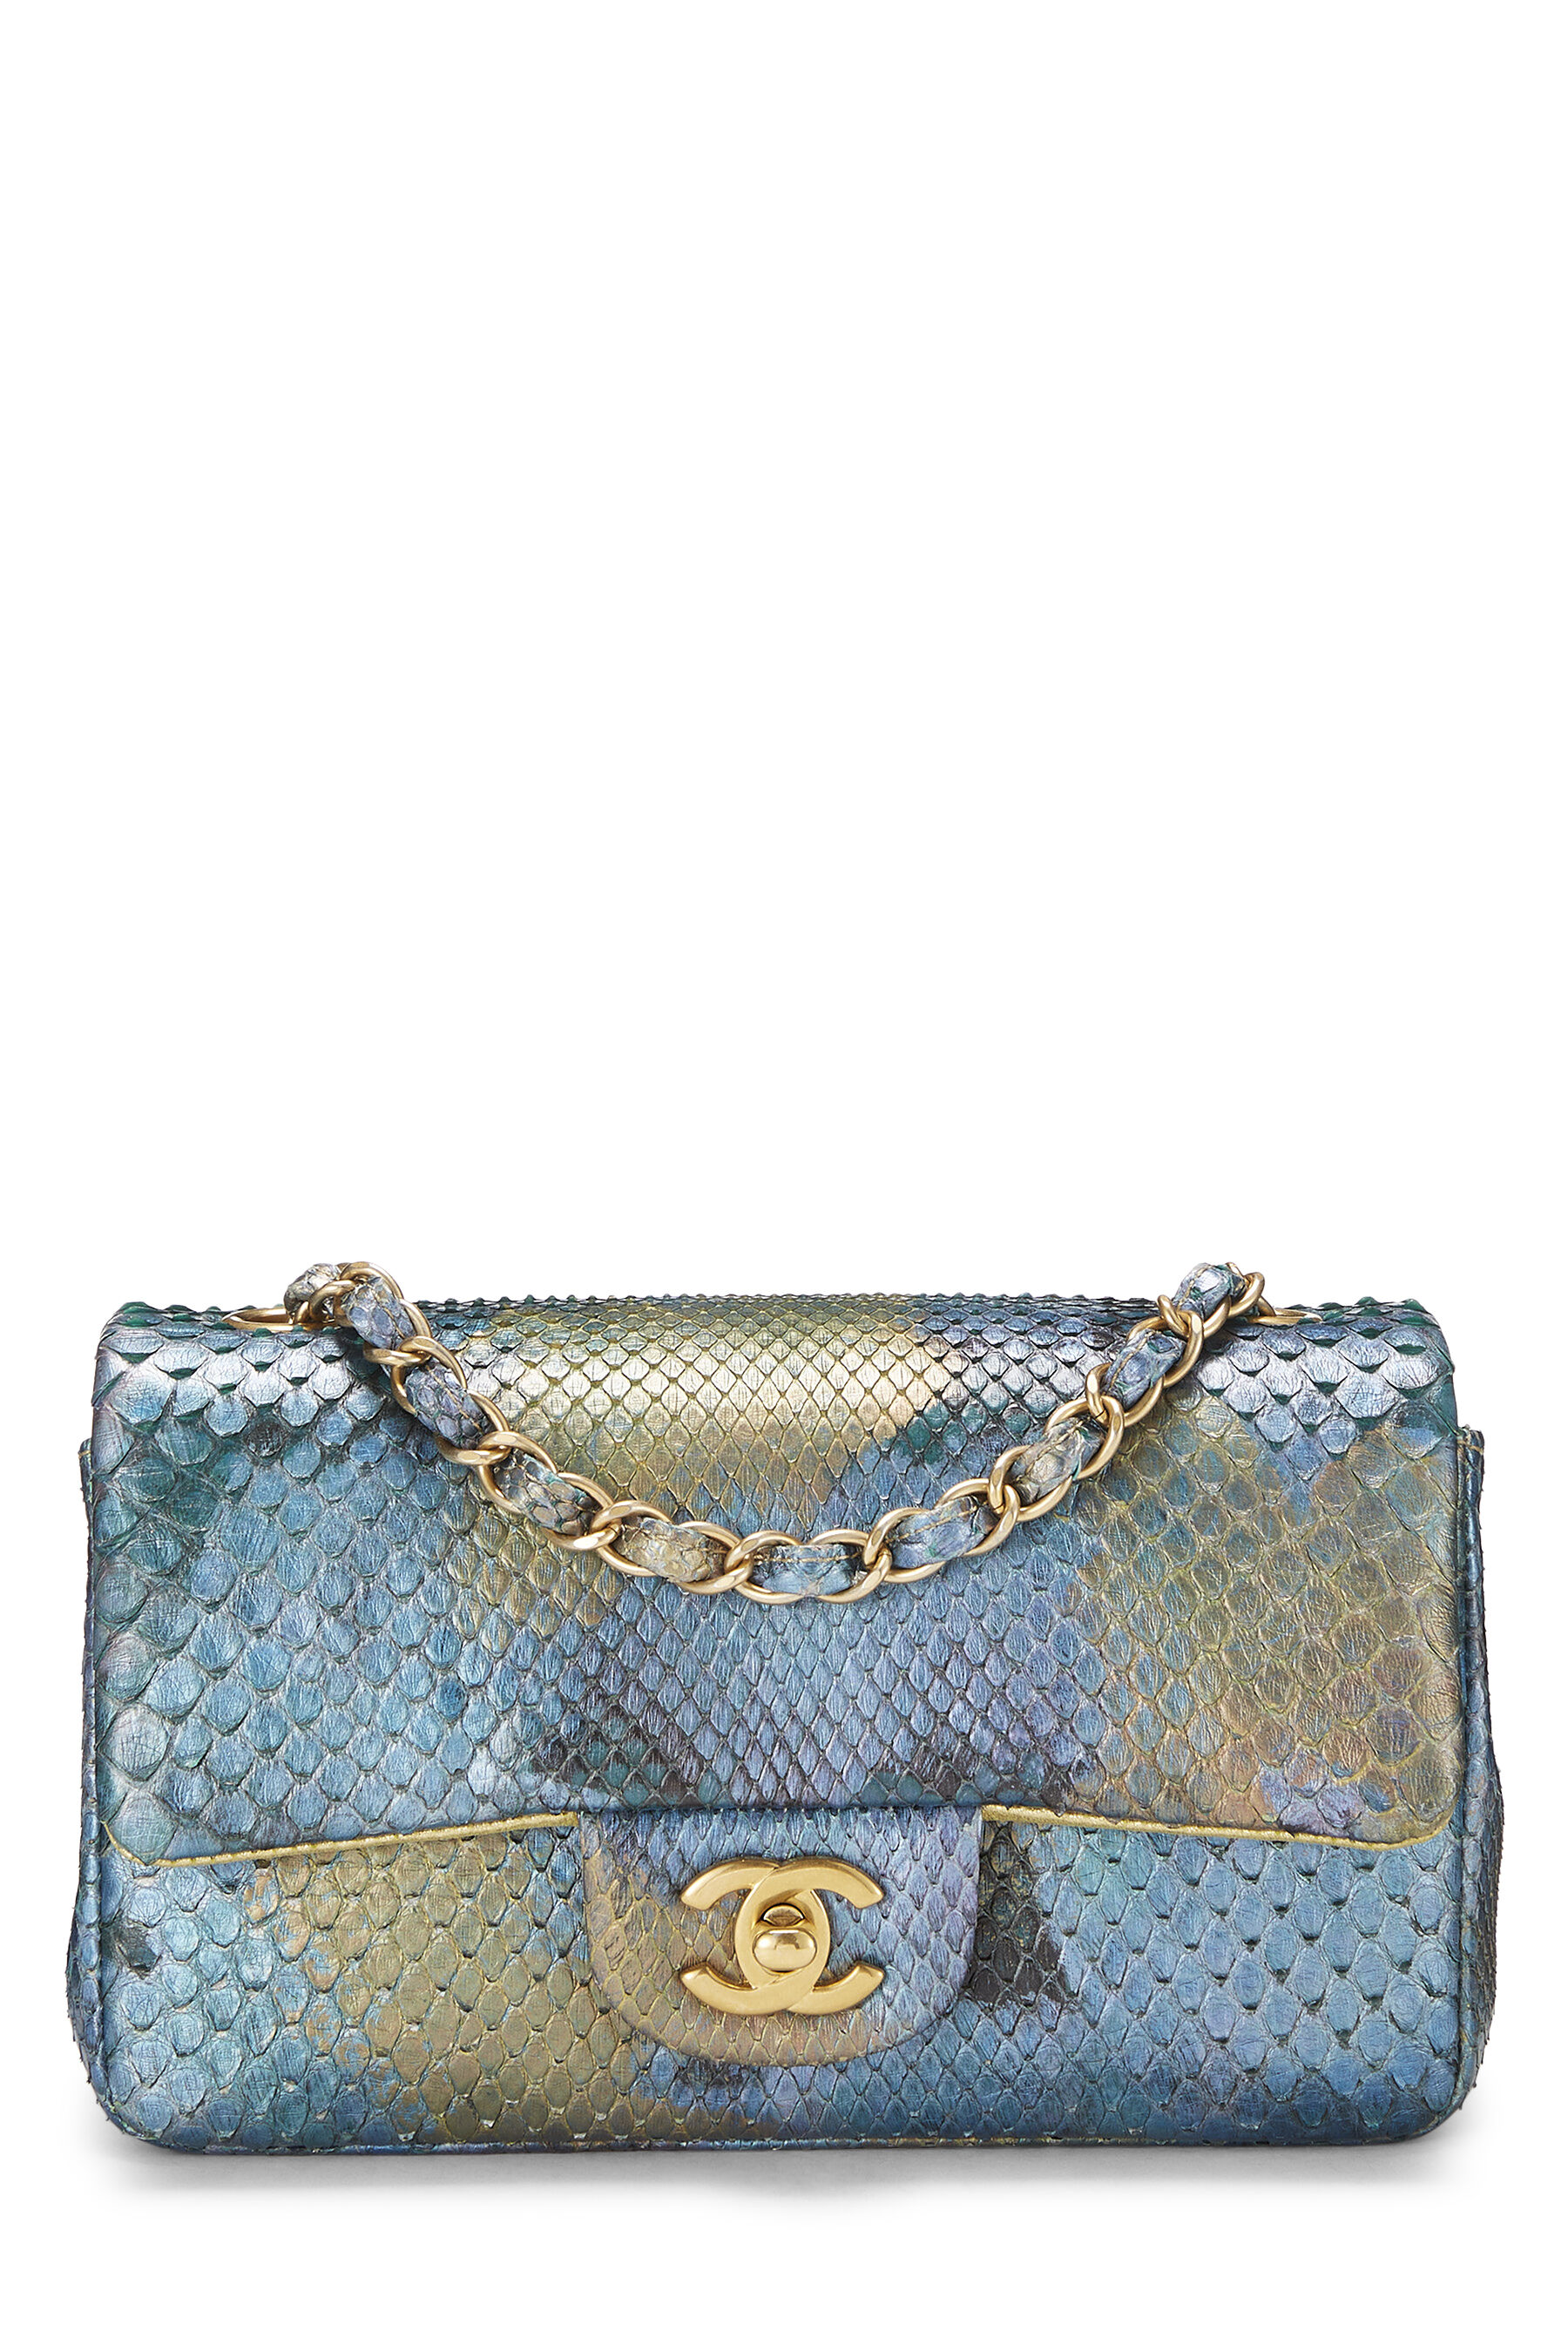 Chanel - Iridescent Blue Python 'CC' Rectangular Flap Bag Small